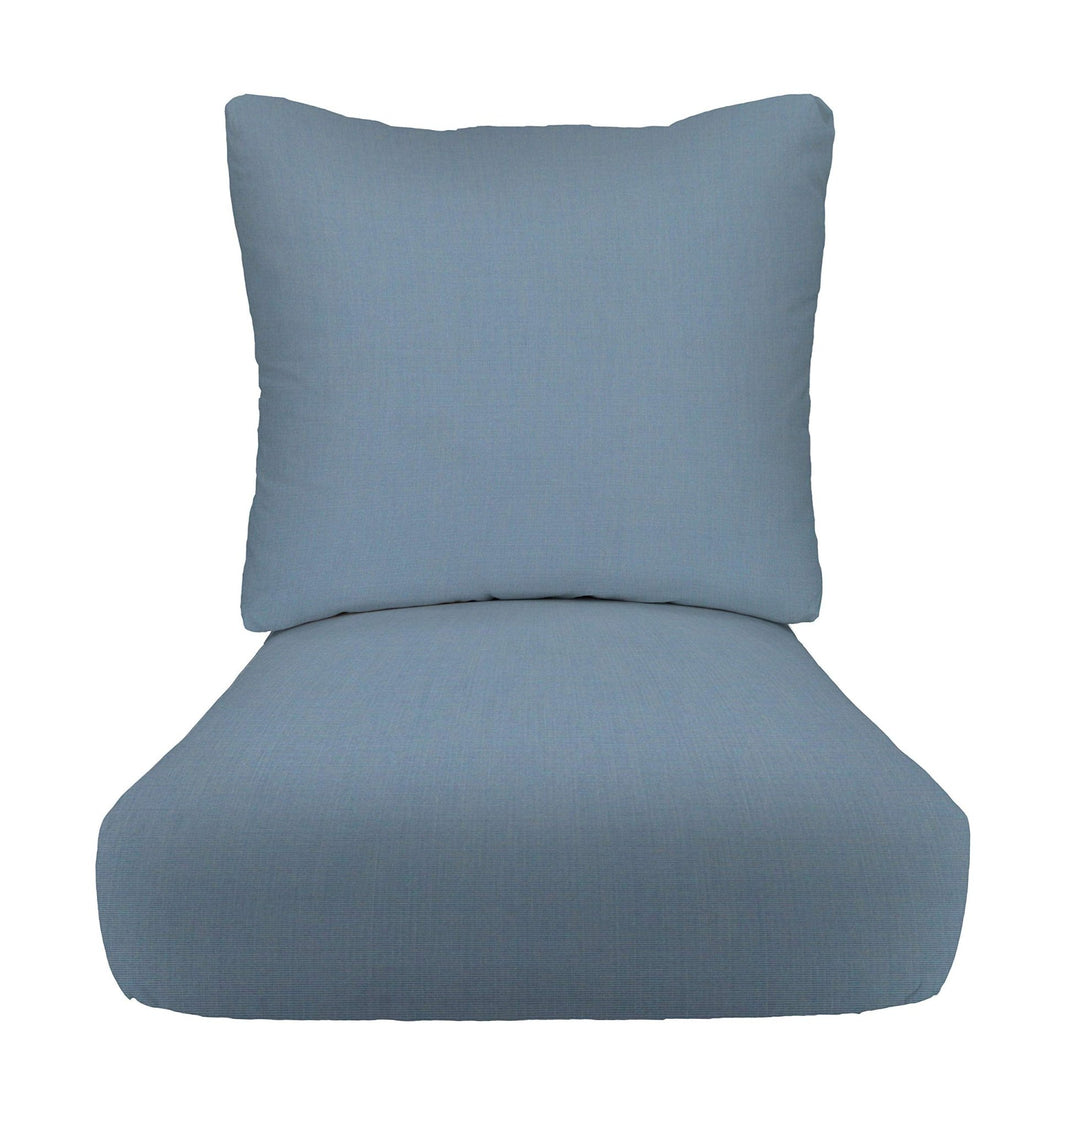 Rsh Décor Indoor Outdoor Pillow BAK Sunbrella Deep Seating Chair Cushion Set, 23”X 24” x 5” Seat and 25” x 21” Back, Choose Color (Canvas Air Blue)